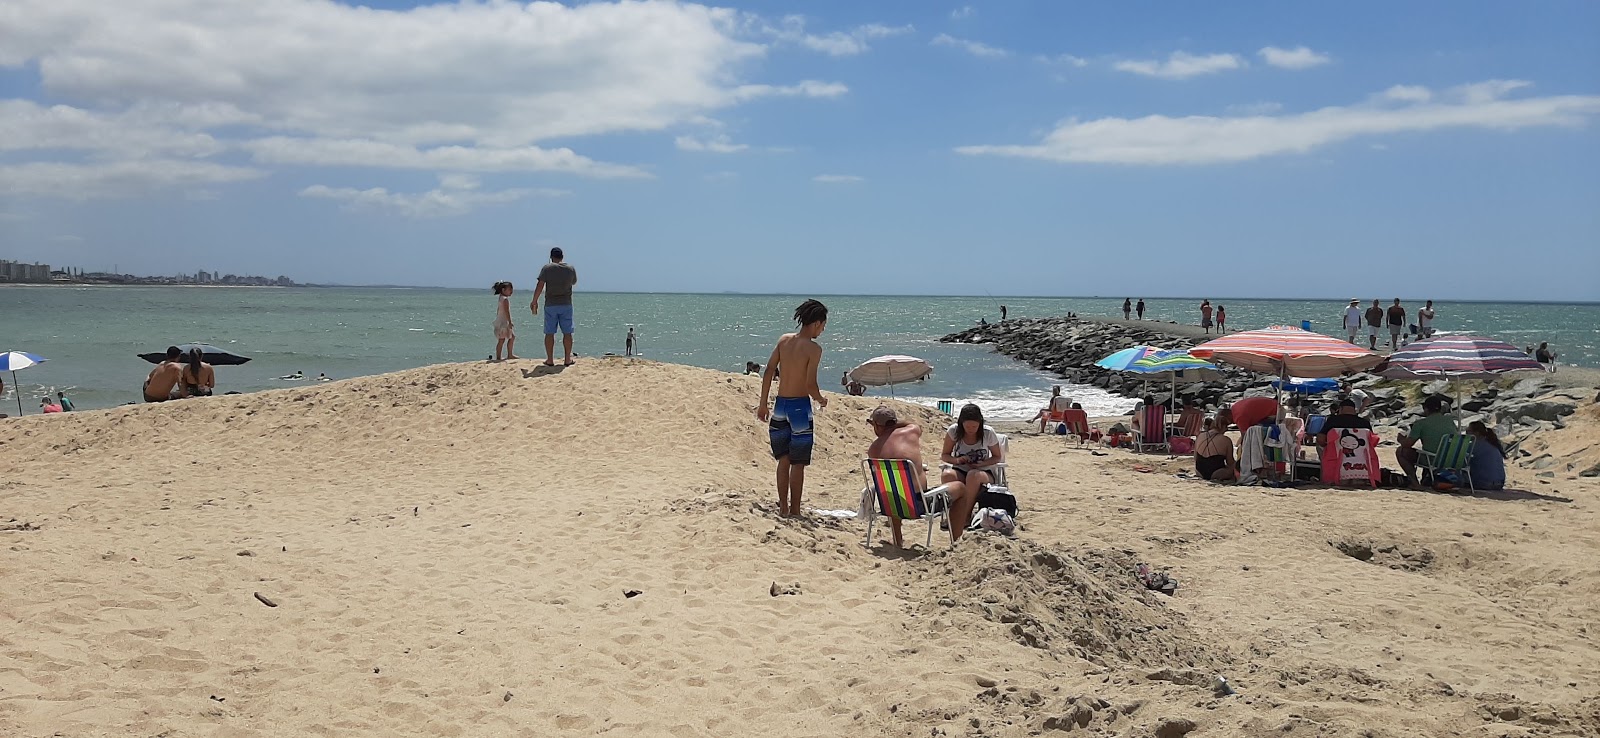 Foto de Praia de Itajuba com alto nível de limpeza